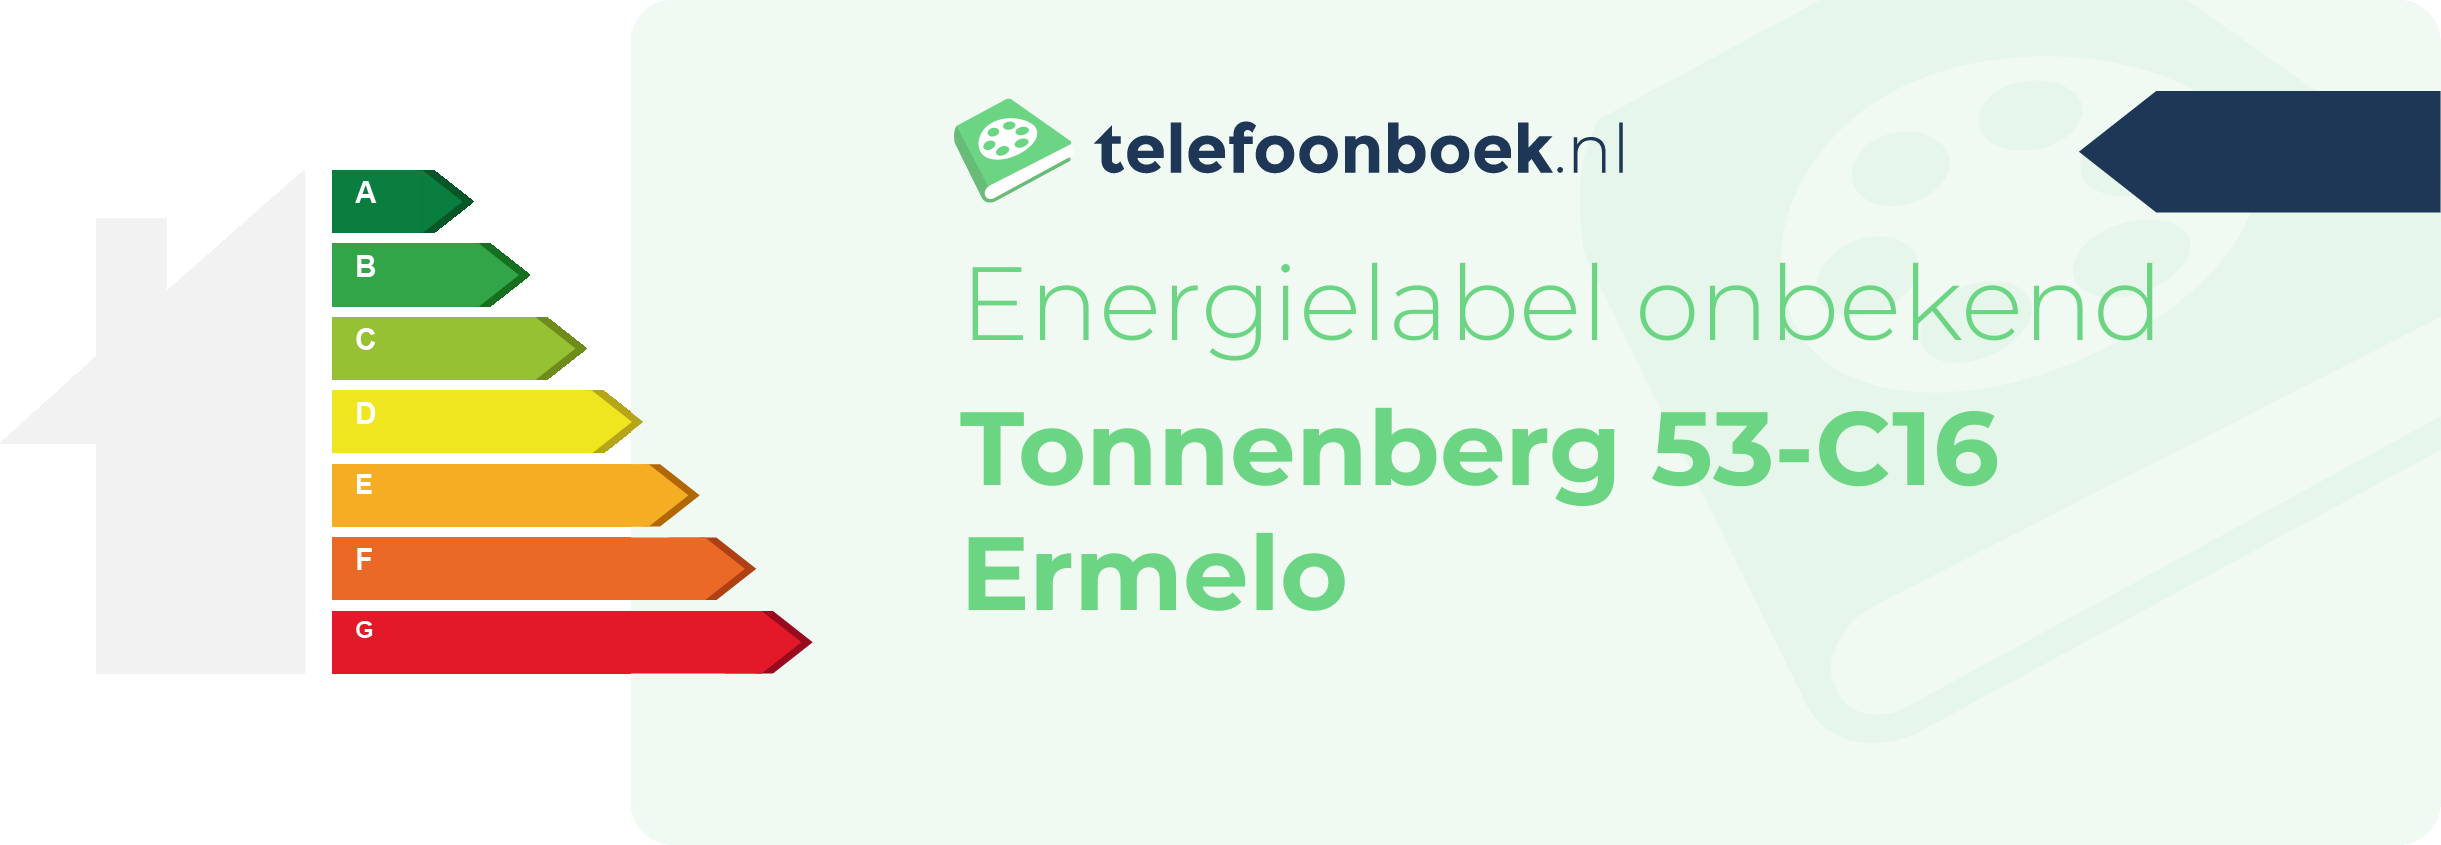 Energielabel Tonnenberg 53-C16 Ermelo